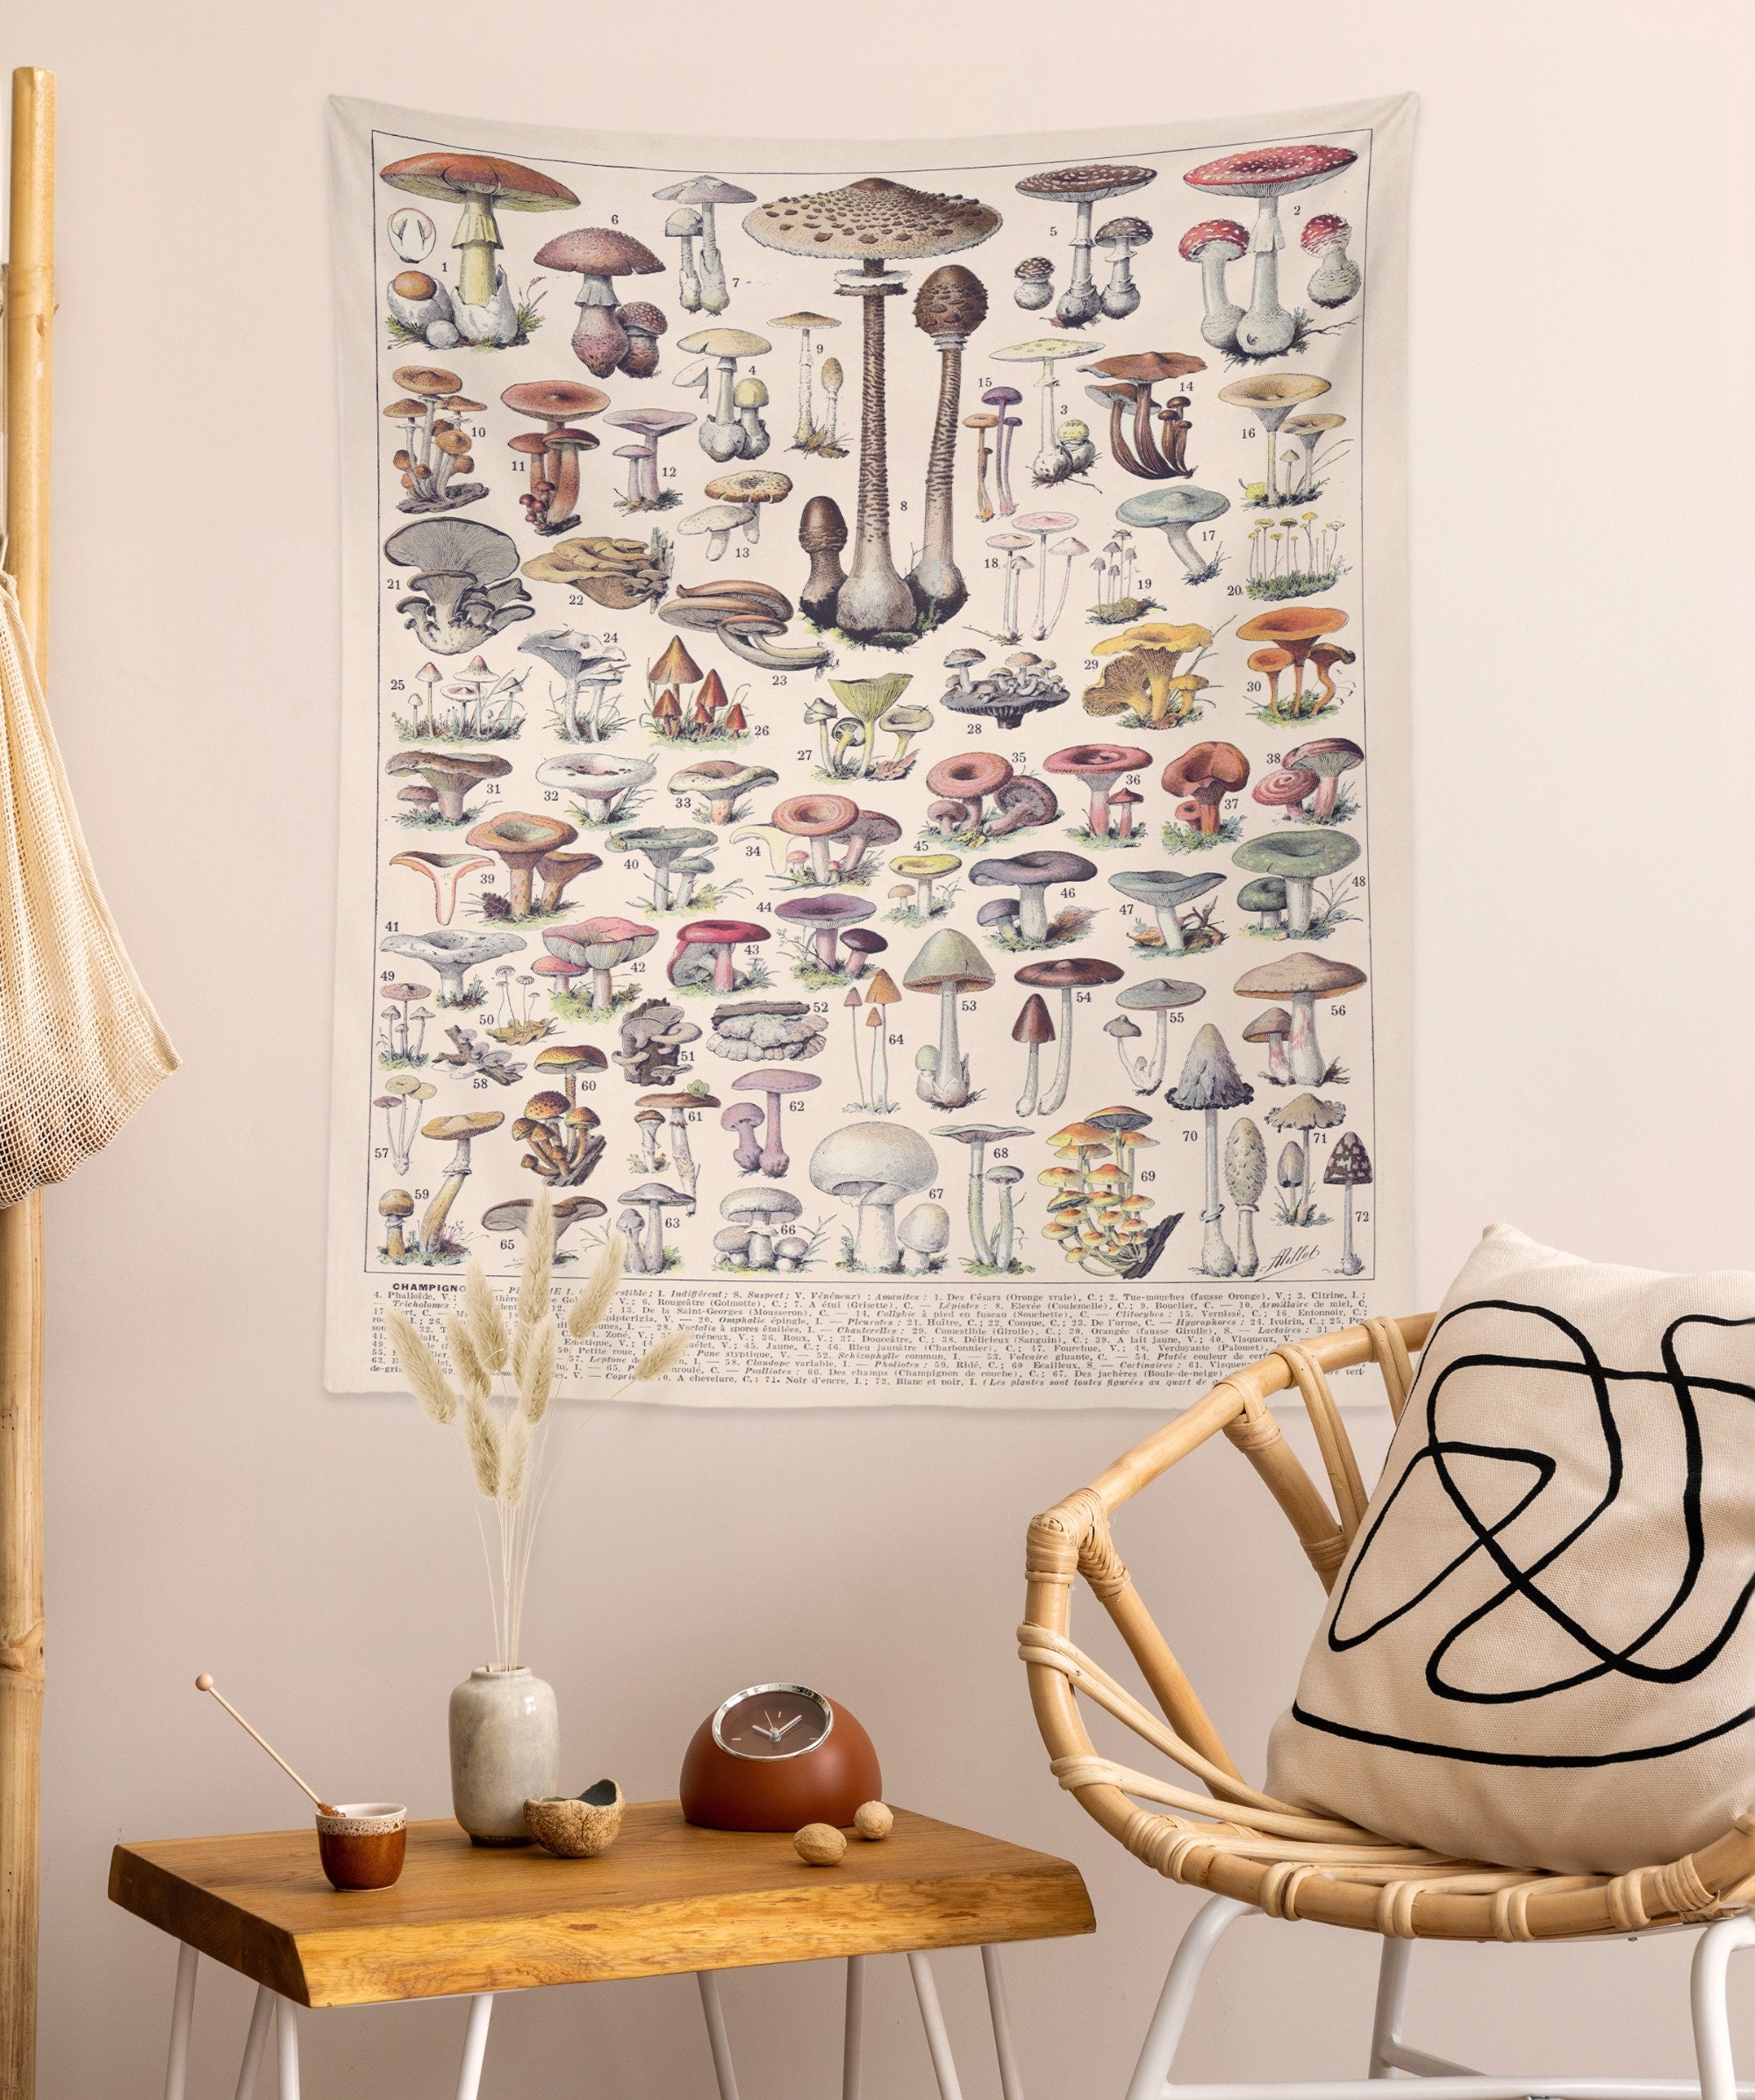 Takashi-Murakami-Flower-Tapestry Wall Hanging Art For Dorm Decor For Living  Room Bedroom Indian Decor Hippie Mural Living College Dorm Room Poster  (80x60 Inches) : : Home